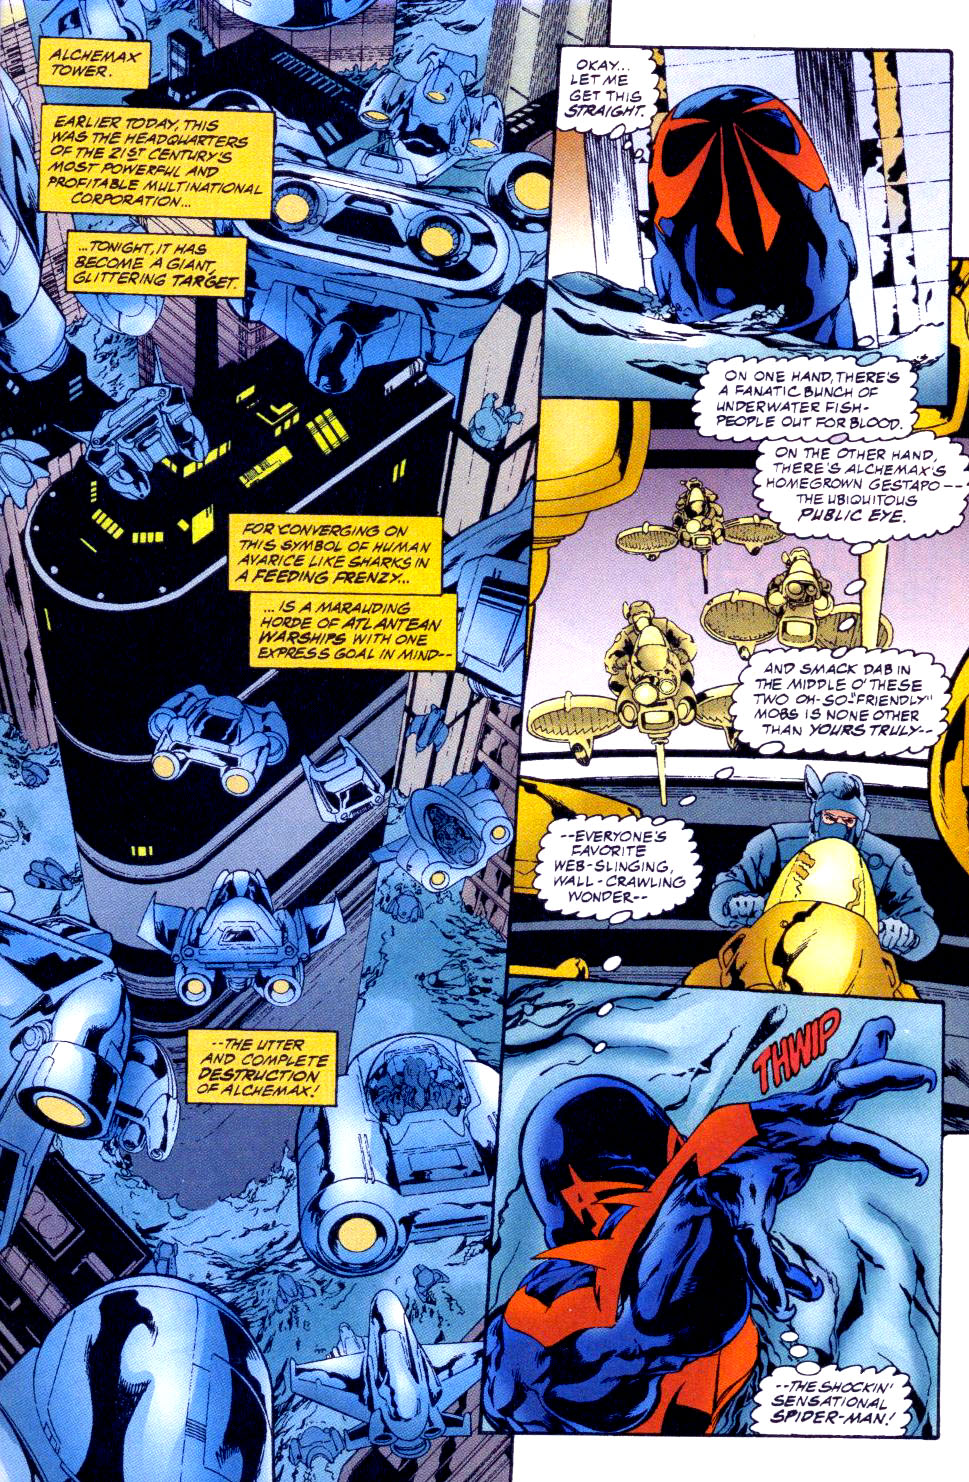 Spider-Man 2099 (1992) issue 46 - Page 2